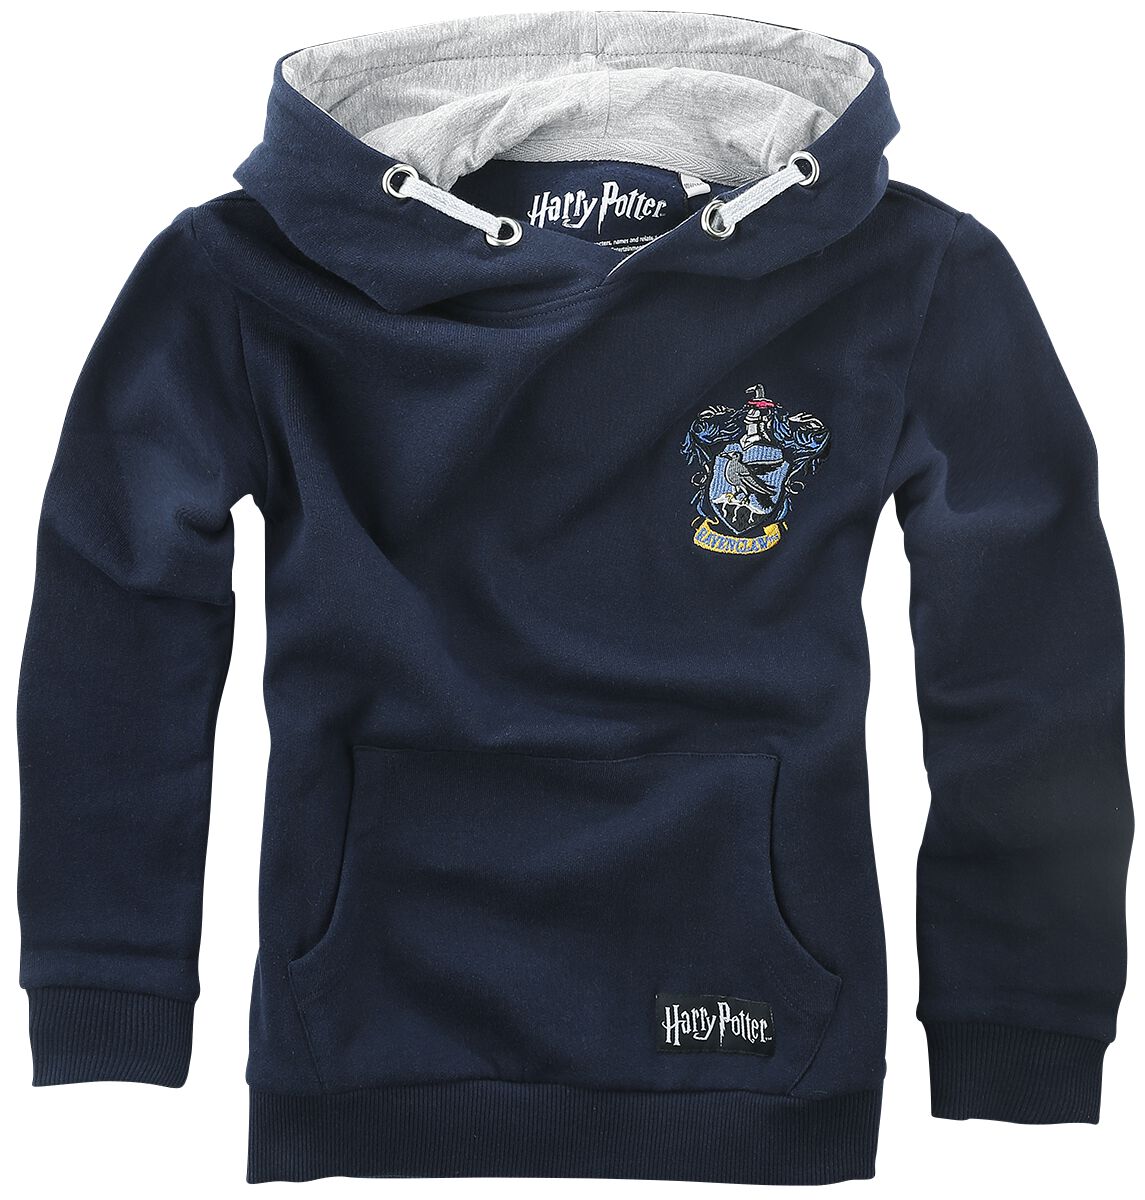 Harry Potter Kapuzenpullover - Kids - Ravenclaw - 116 bis 140 - Größe 116 - navy  - EMP exklusives Merchandise!